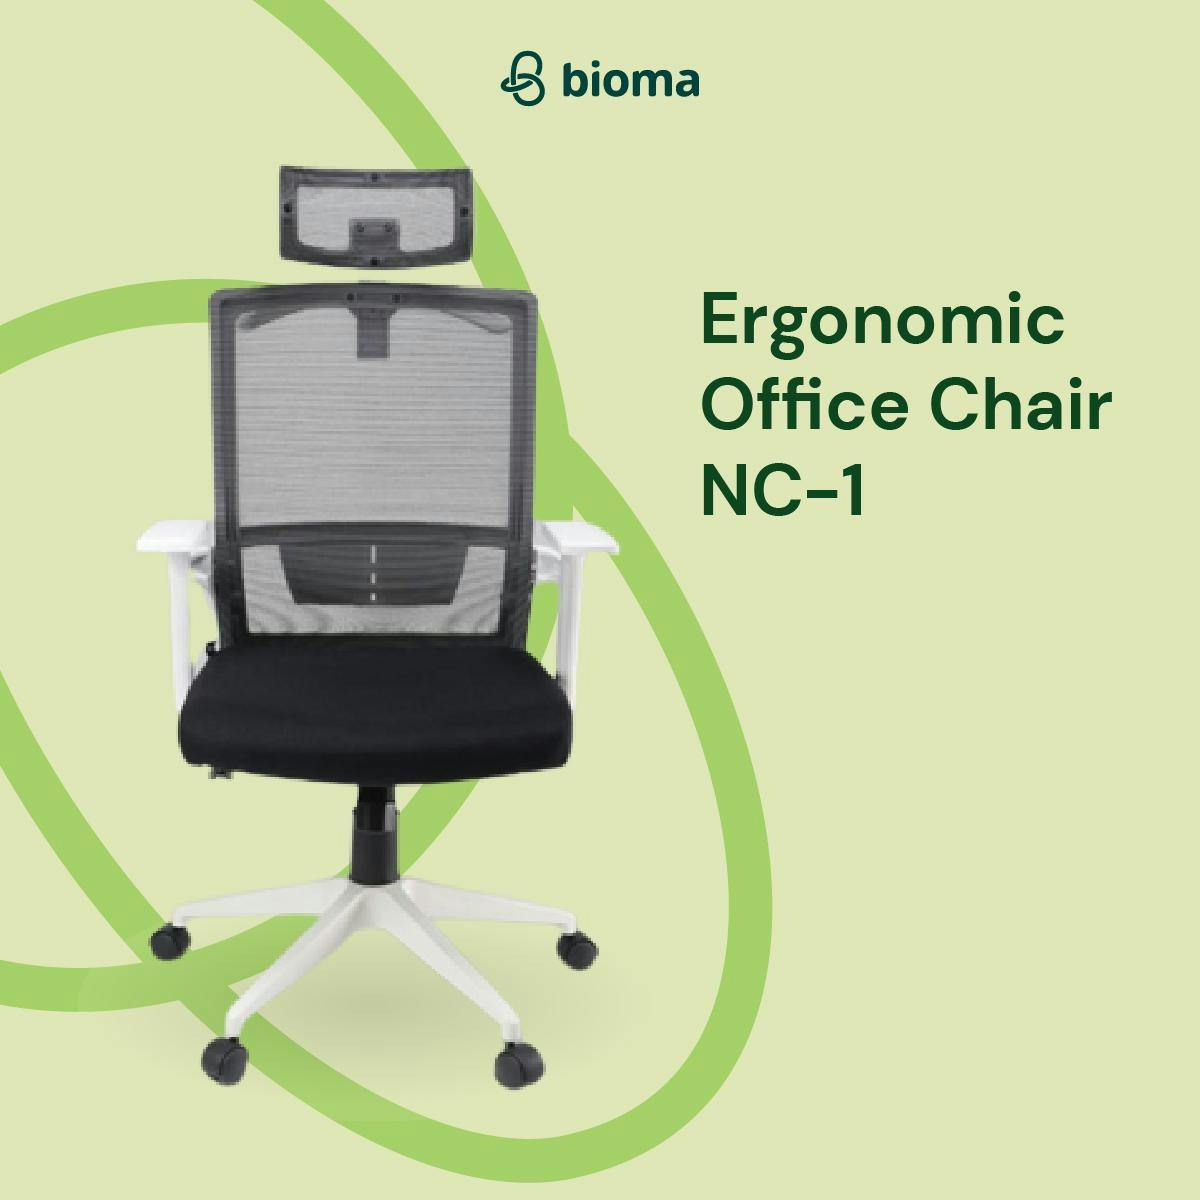 Ergonomic Office Chair NC-1